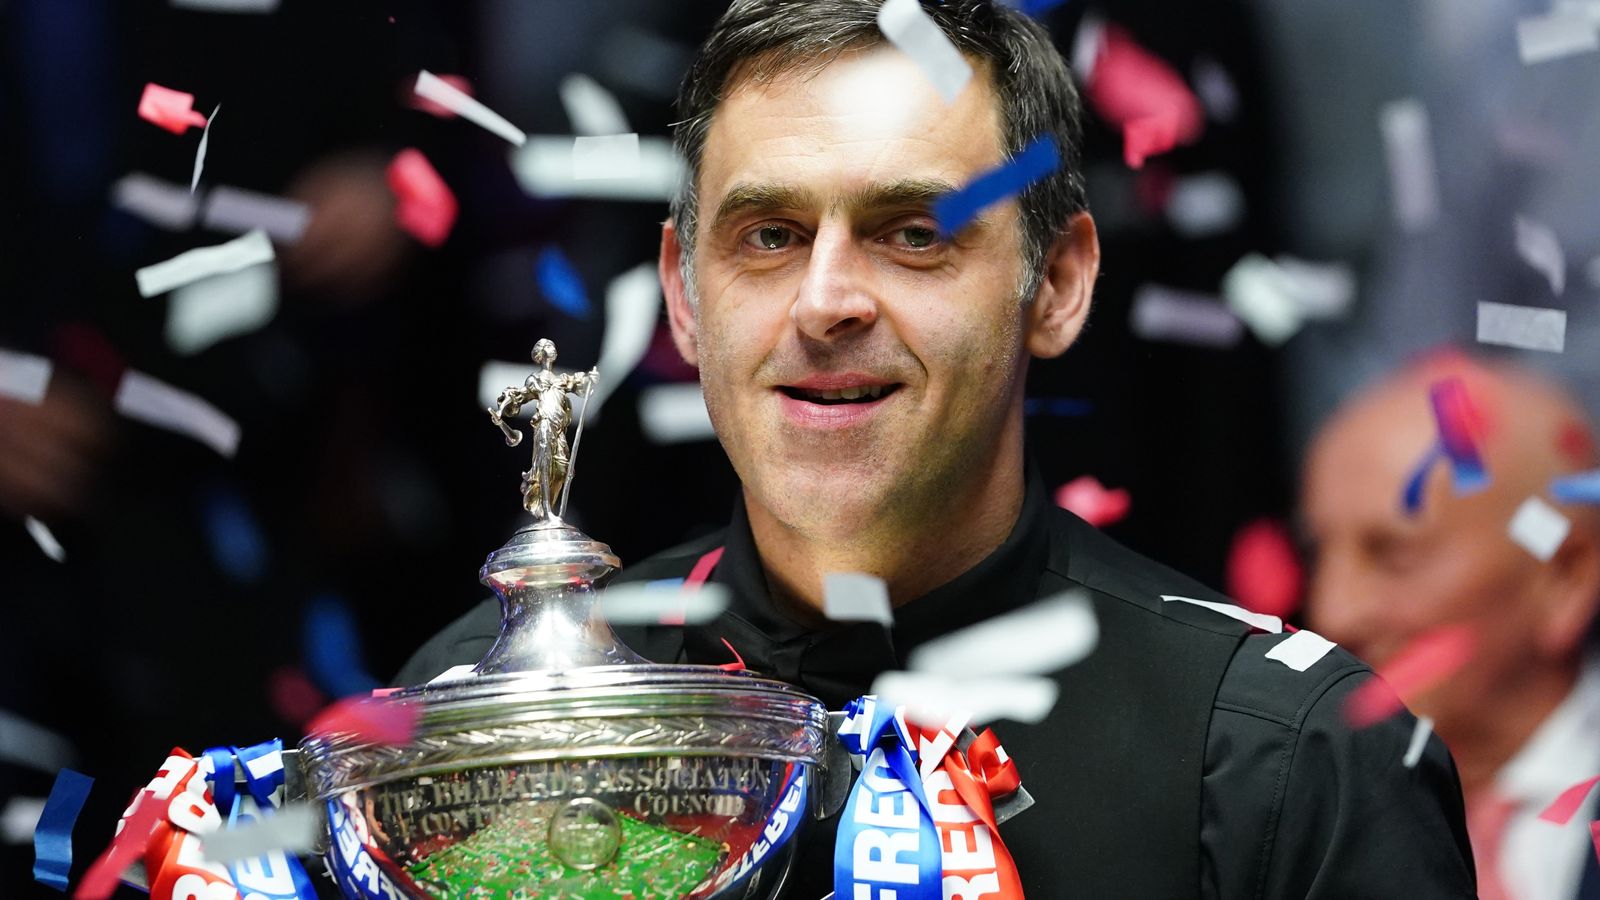 Who won the 2022 World Snooker Championship?